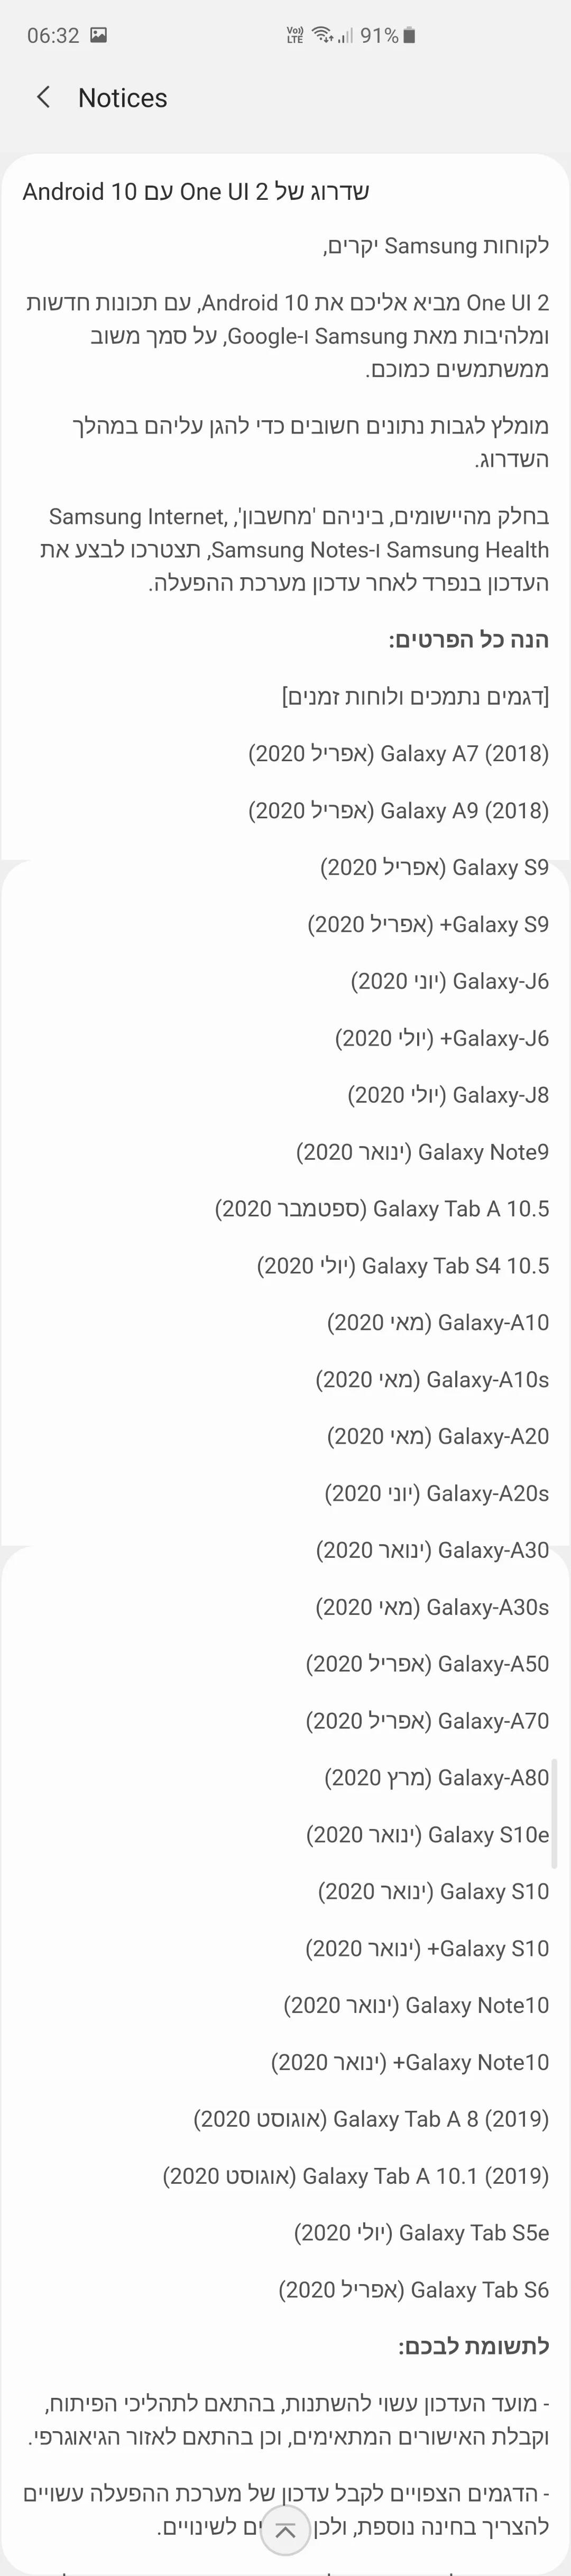 date de sortie d'Android 10 téléphones Samsung